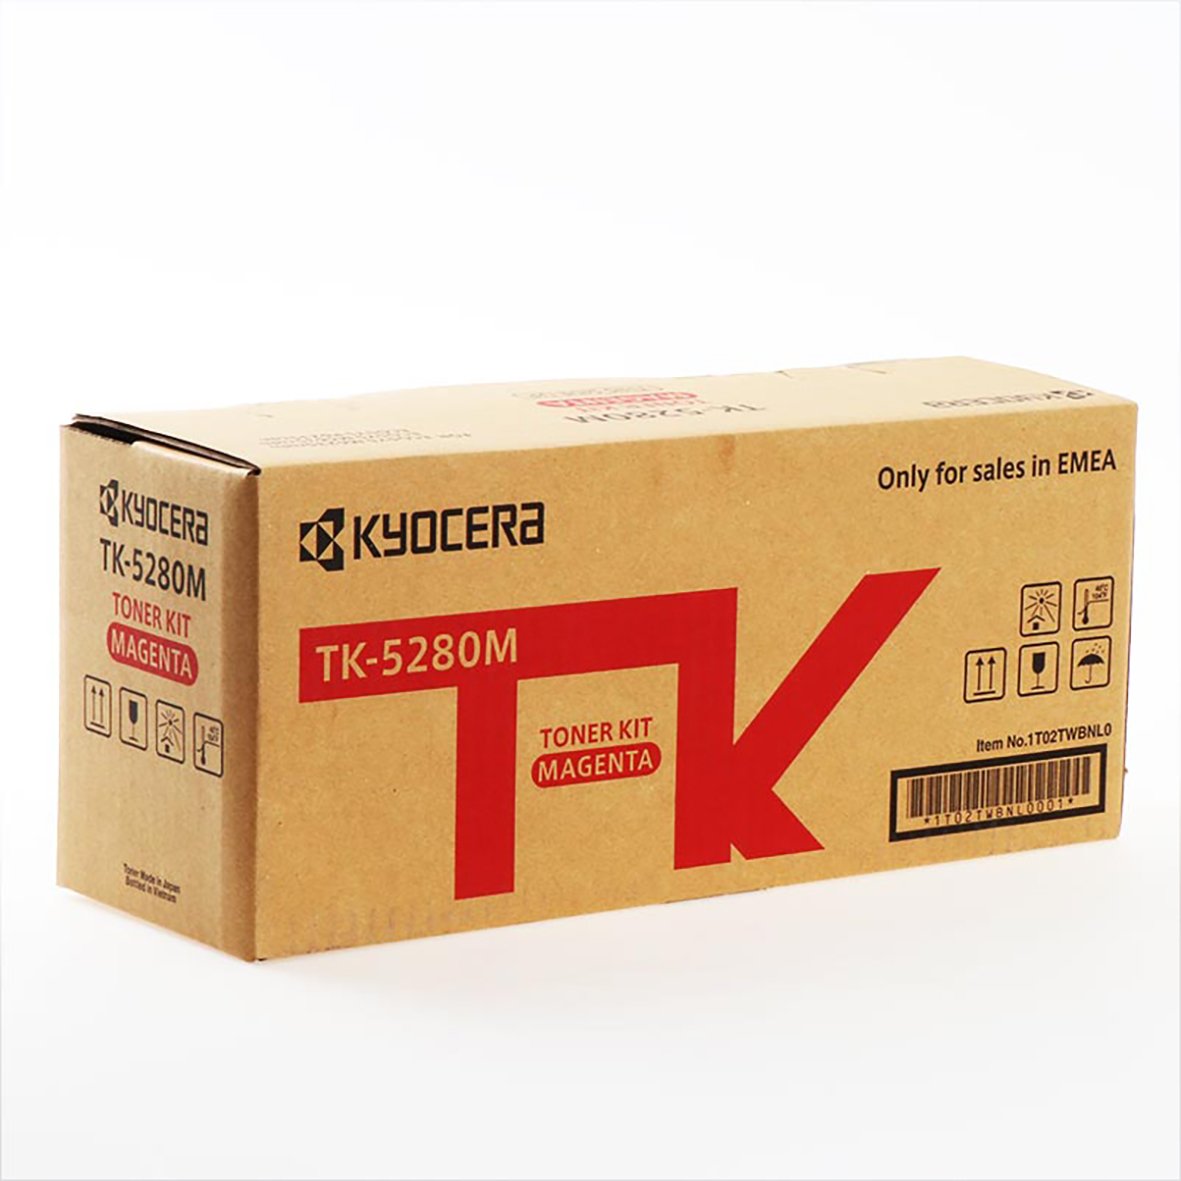 Toner Kit Kyocera 11000sid TK-5280M Magenta 32110351